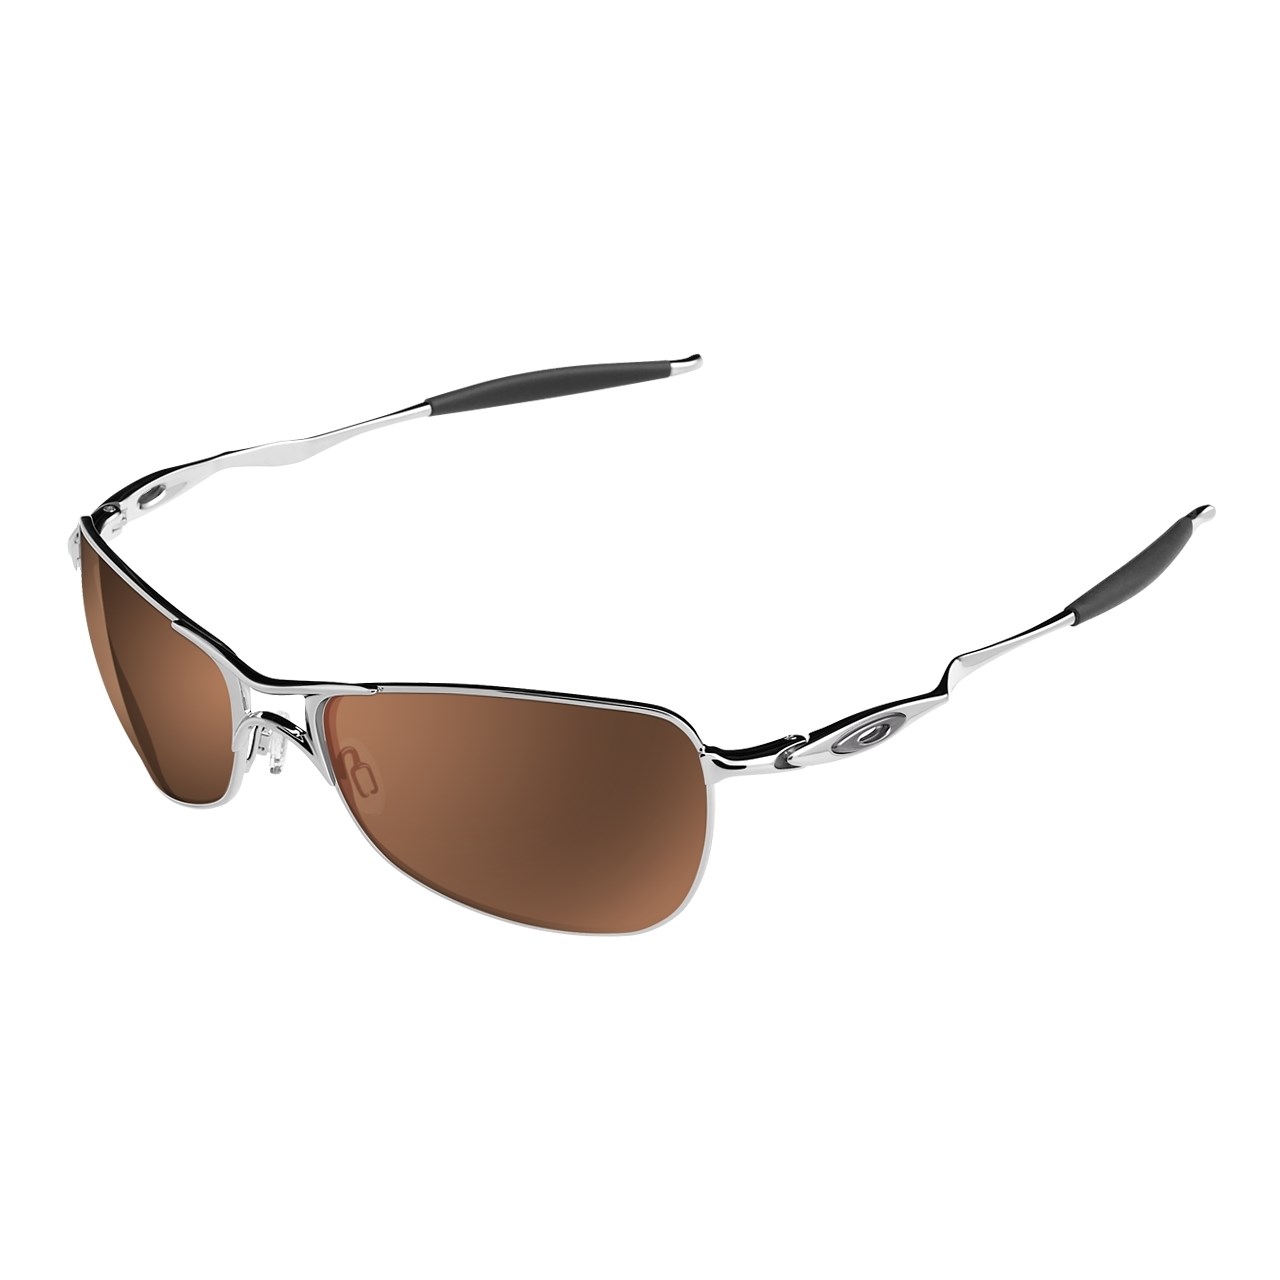 Oakley Crosshair Sunglasses evo